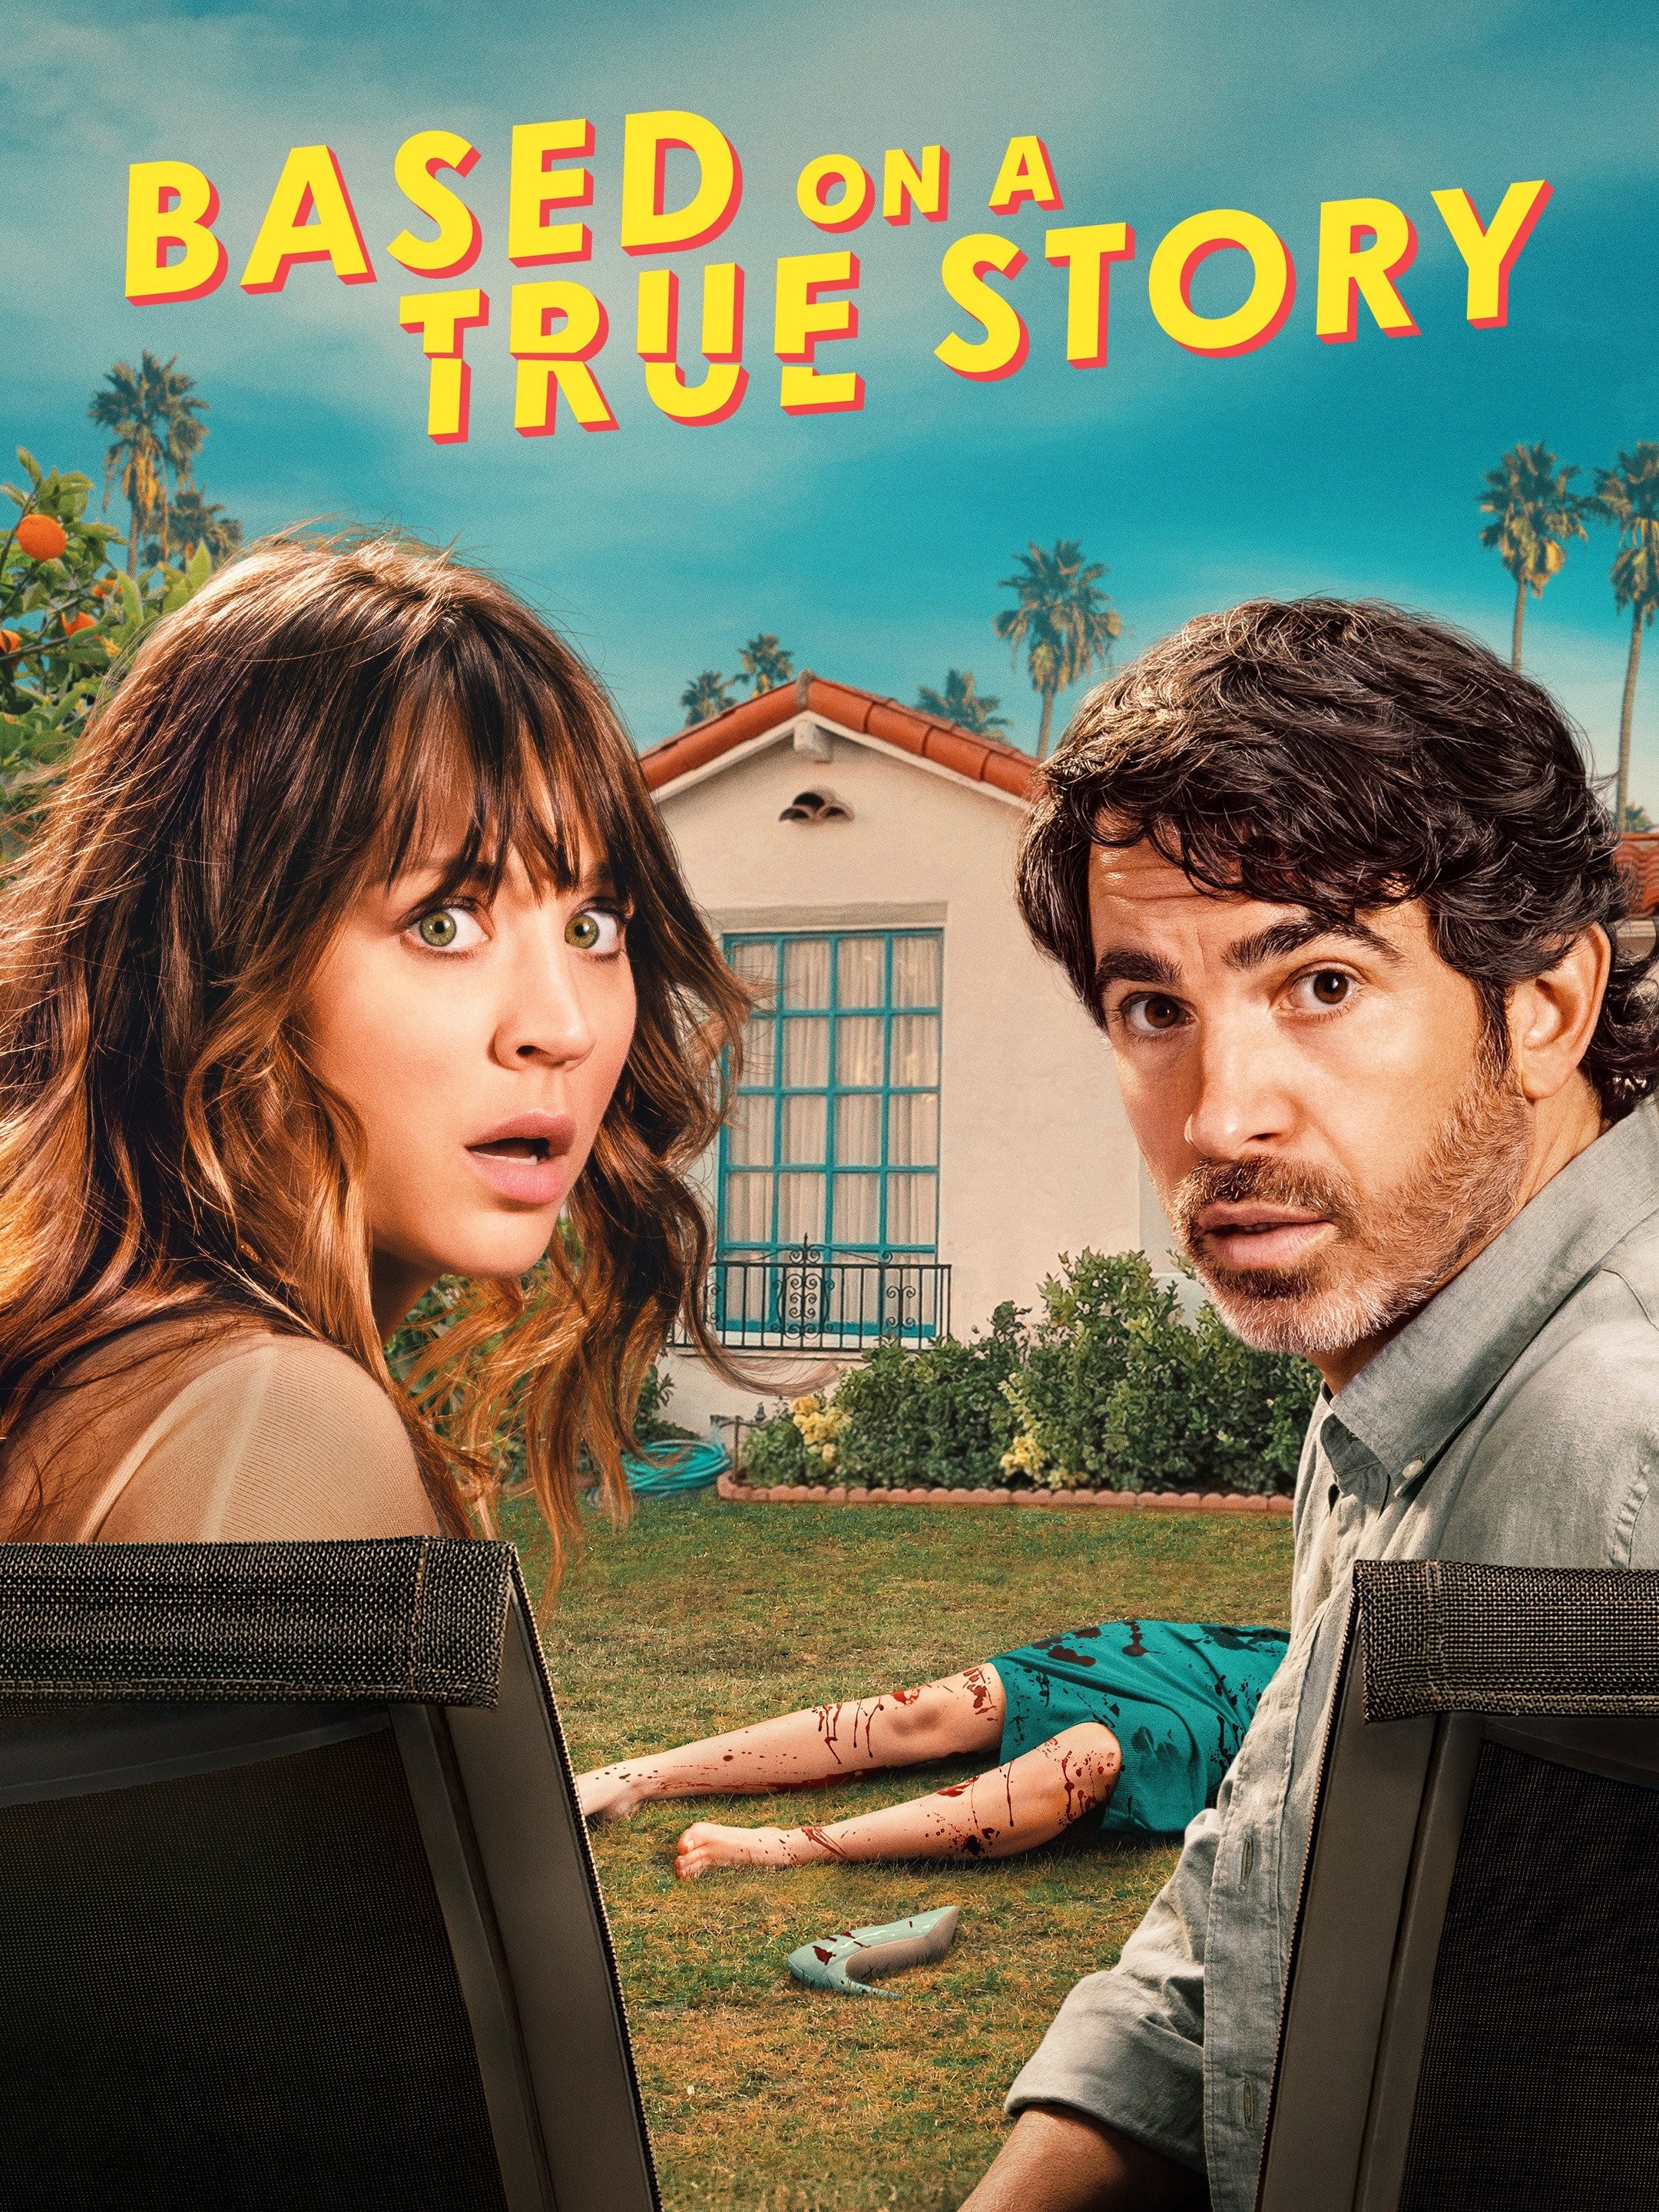 True Love Or True Lies Series 2: Meet The Couples 